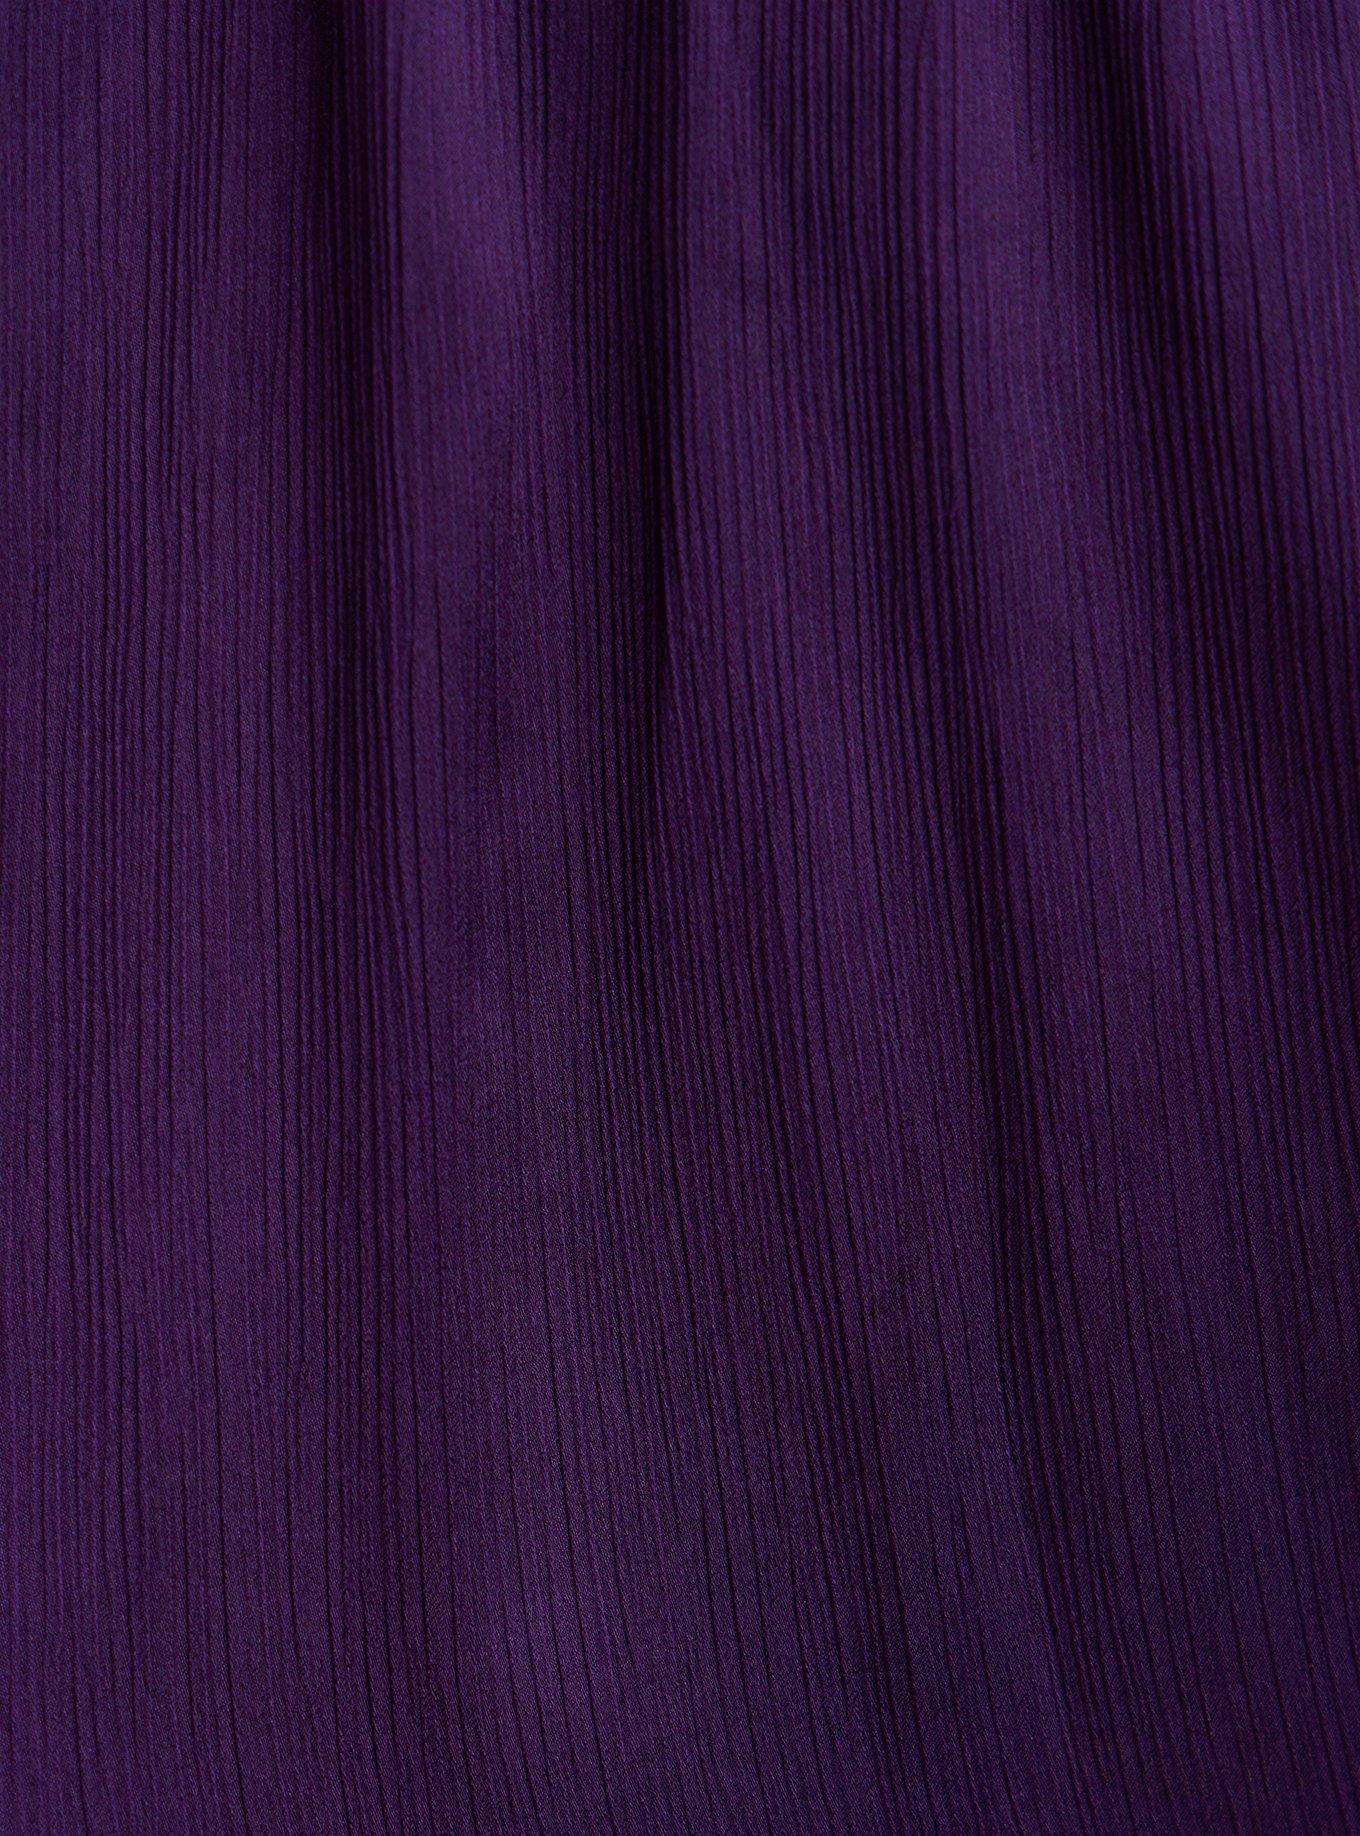 Torrid Adorable Purple Super Soft T Shirt Midi Dress Plus Size 3X, 22/24